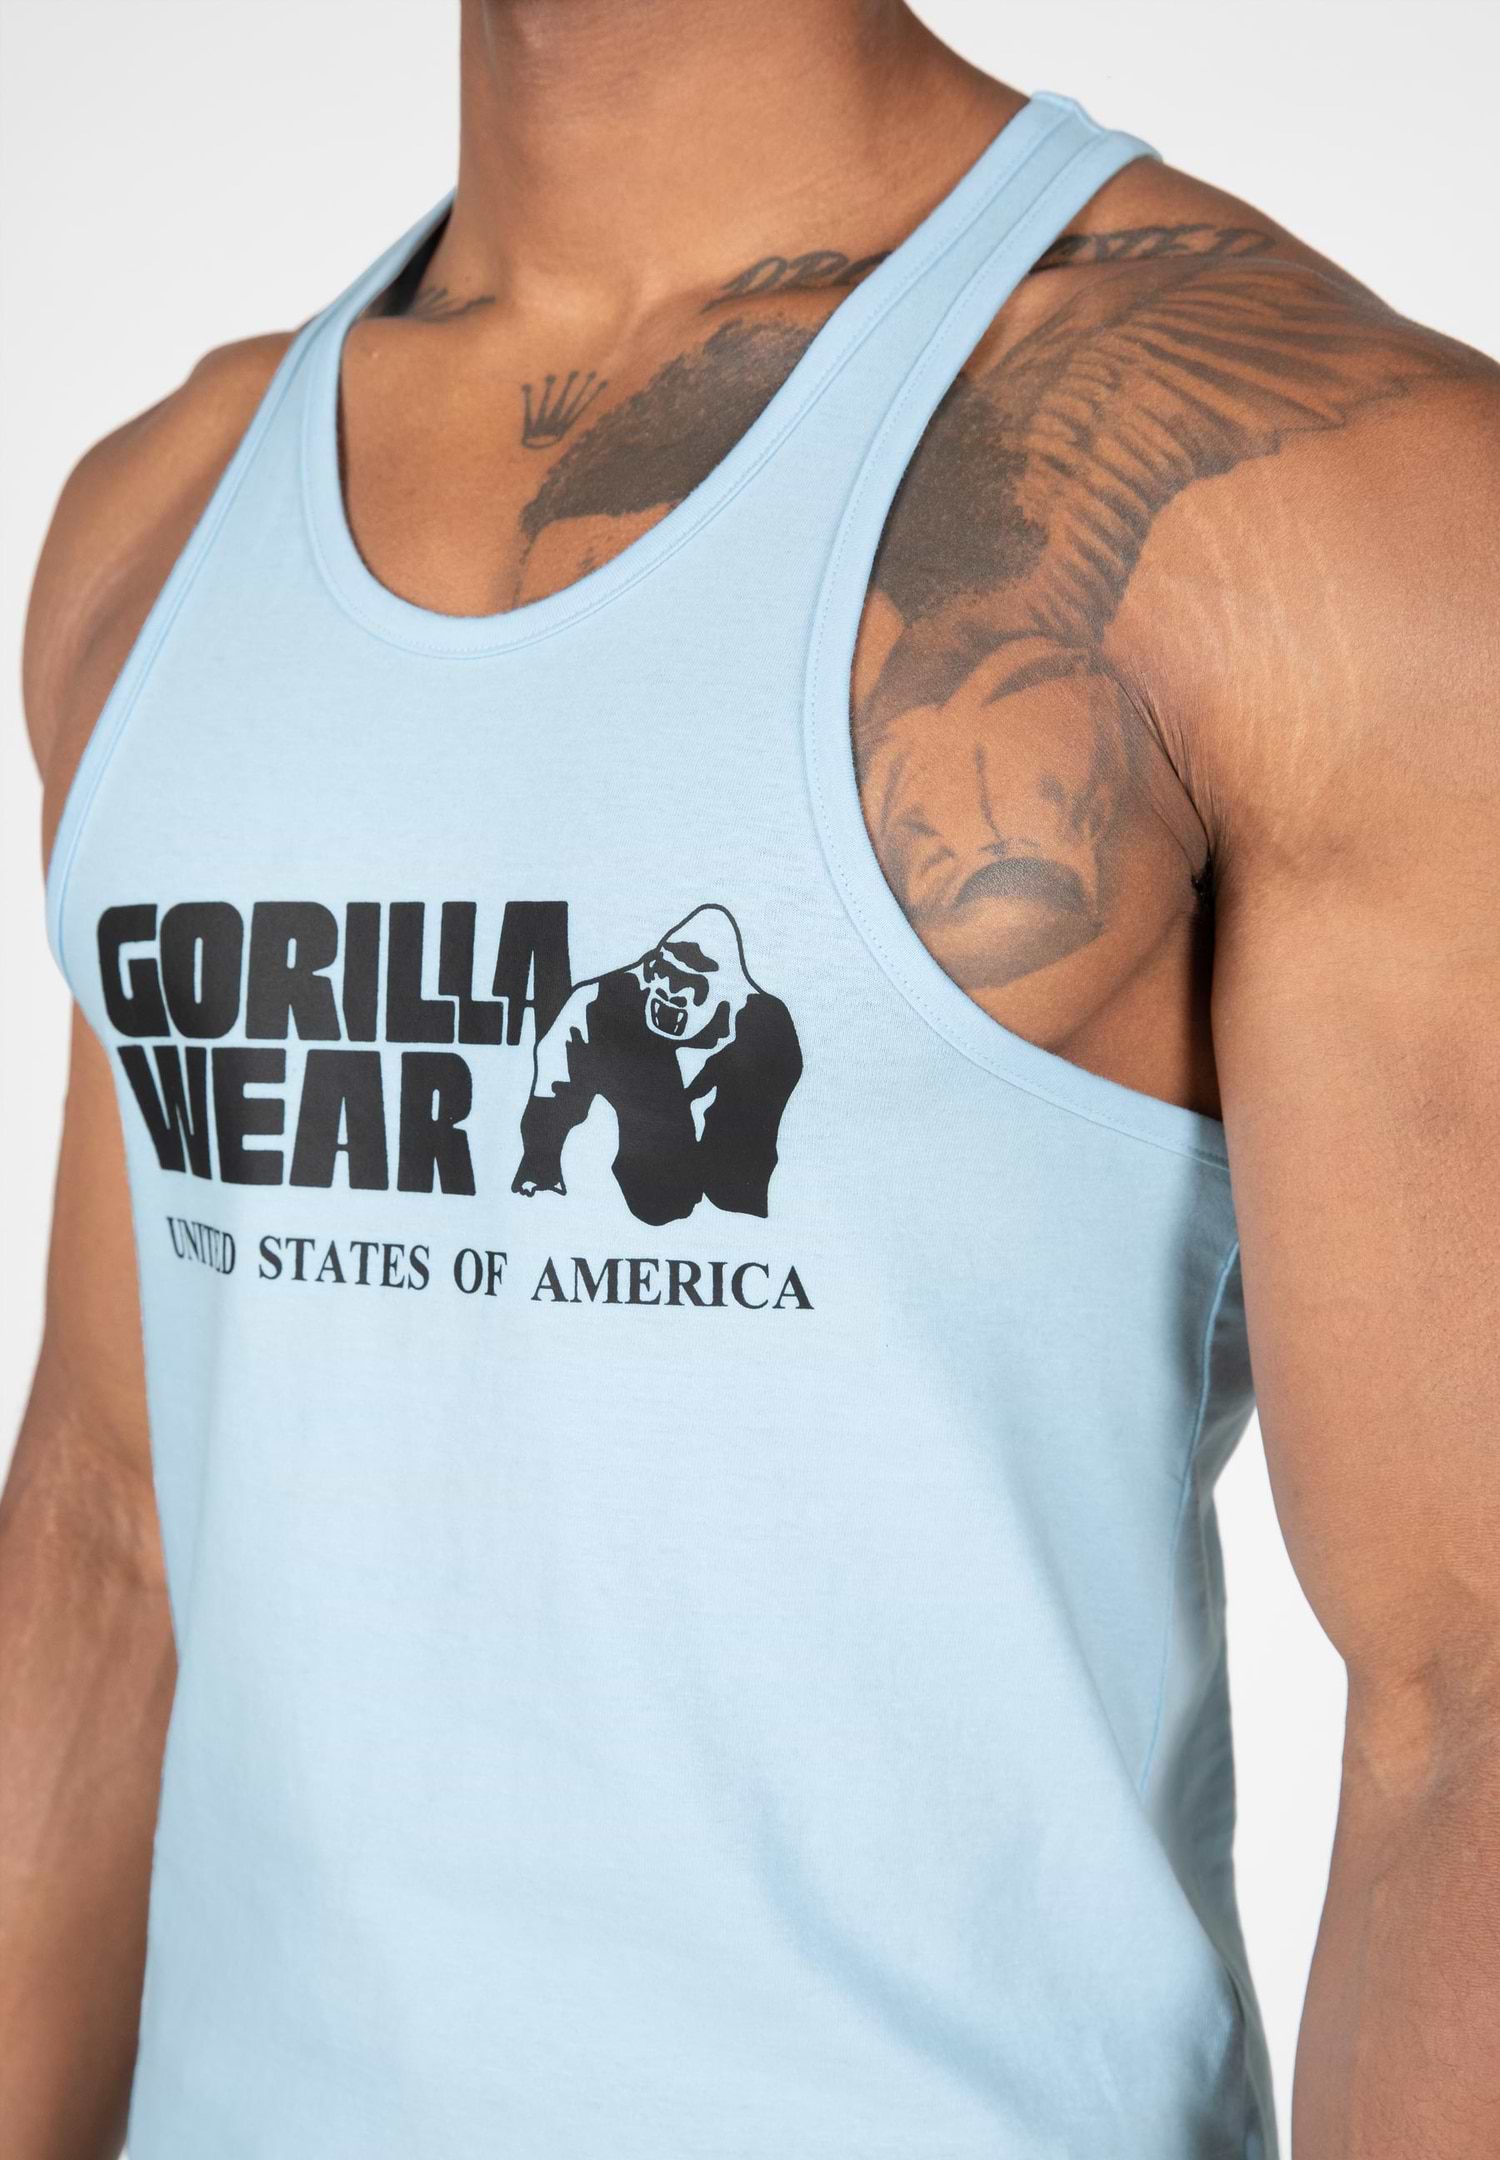 Vintage Gorilla Wear Tank Top Shirt Large bodybuilding gym